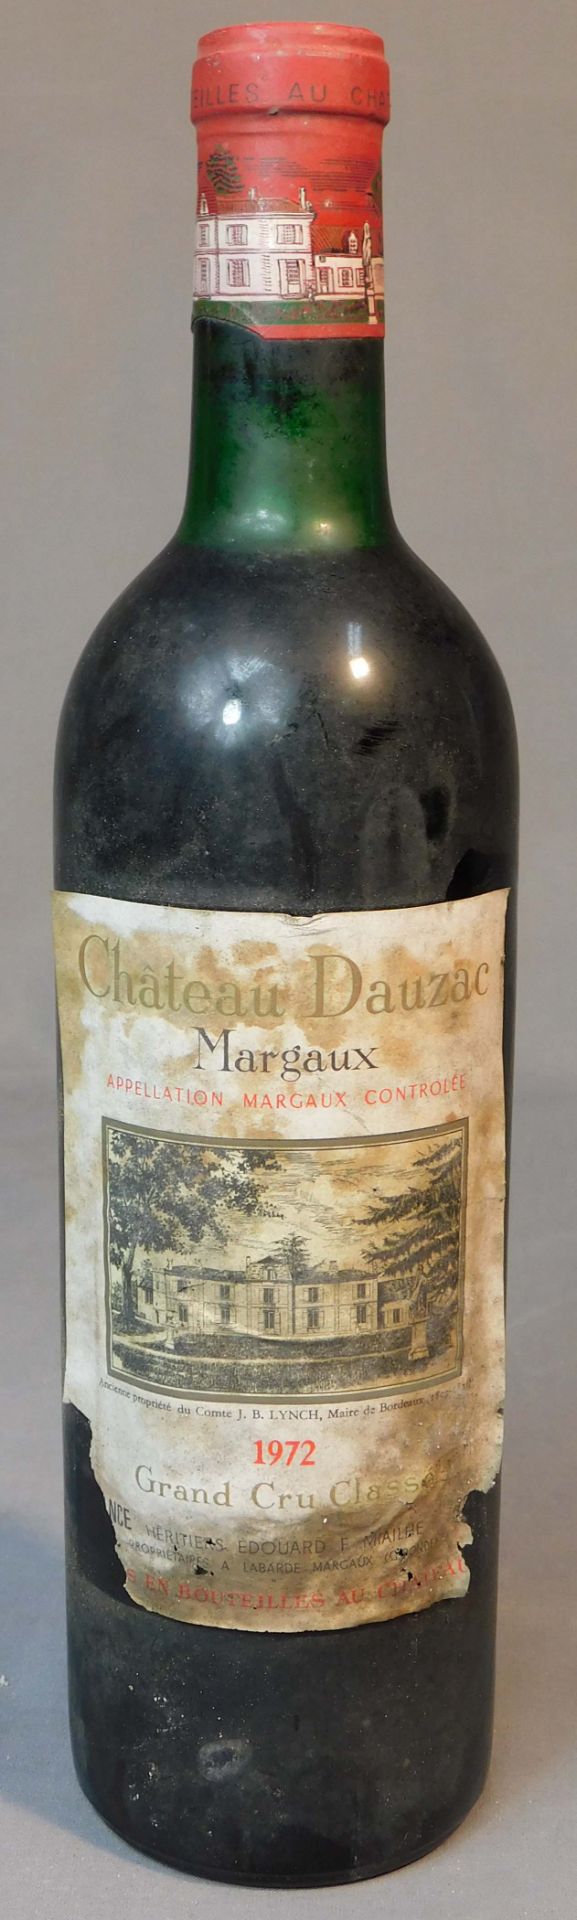 3 Flaschen Bordeaux Grand Cru Classé. Rotwein Frankreich. - Image 5 of 18